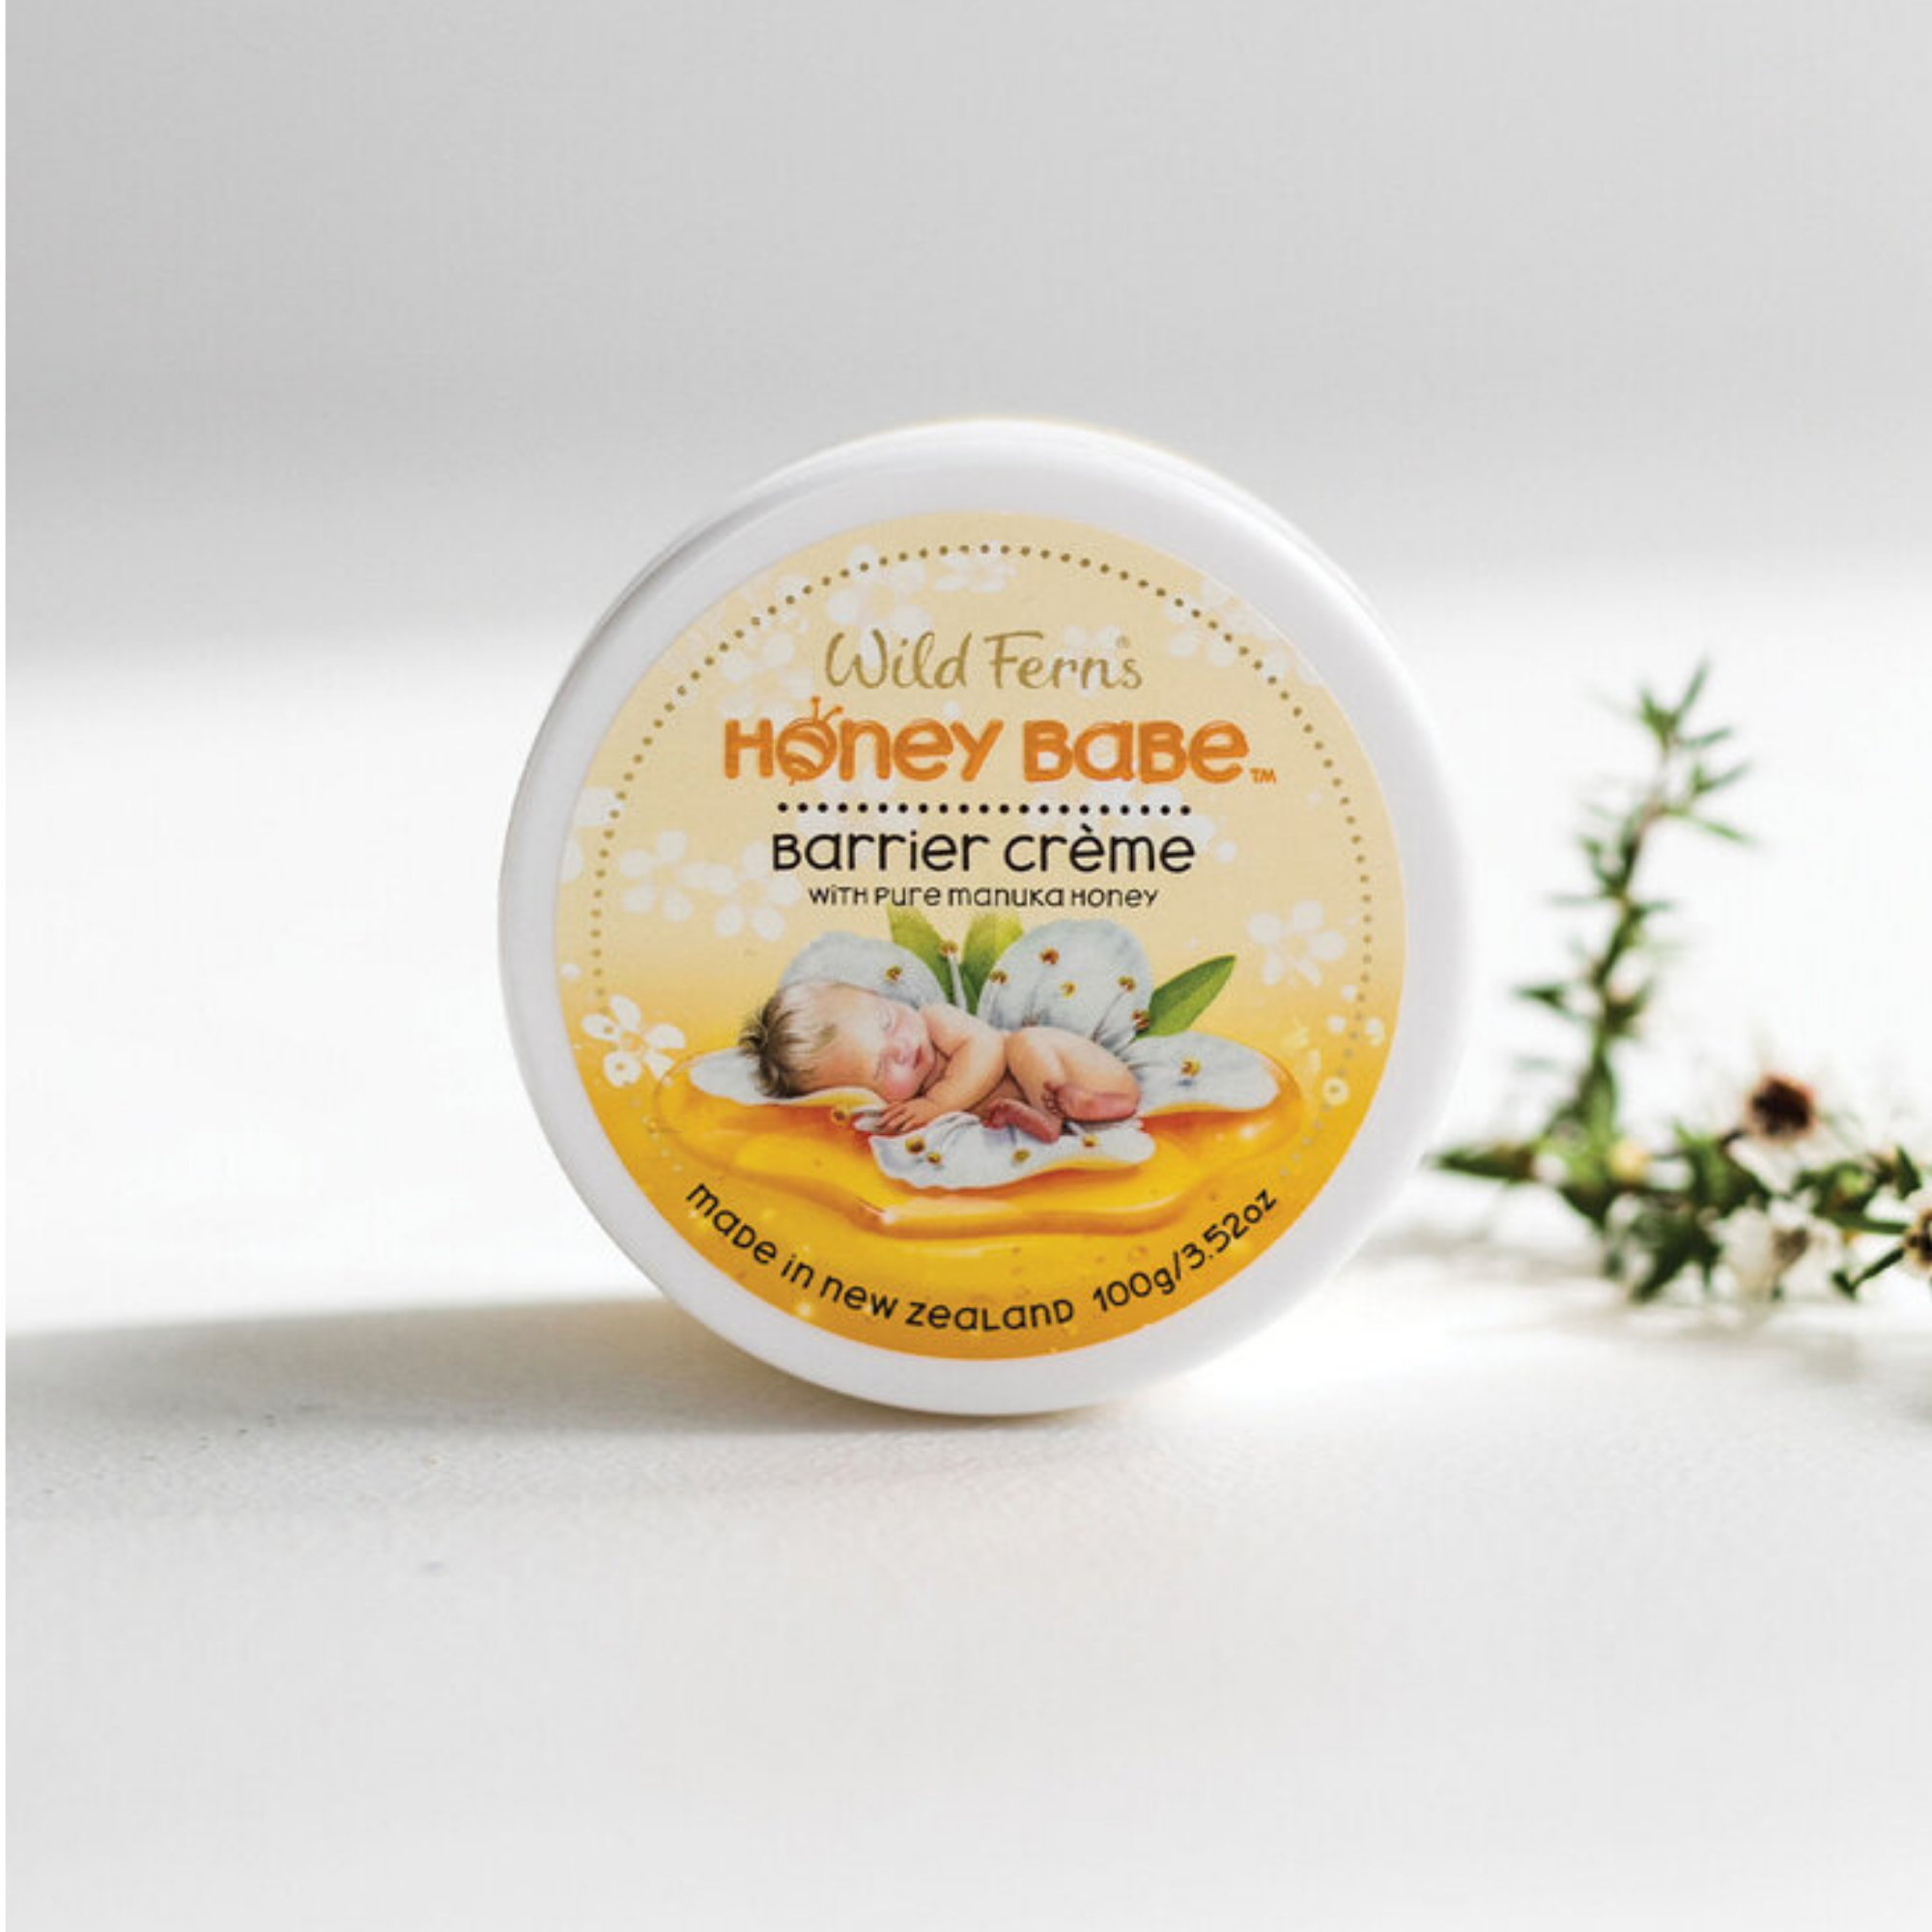 Wild Ferns Honey Babe Barrier Creme Pure Manuka Honey 100g